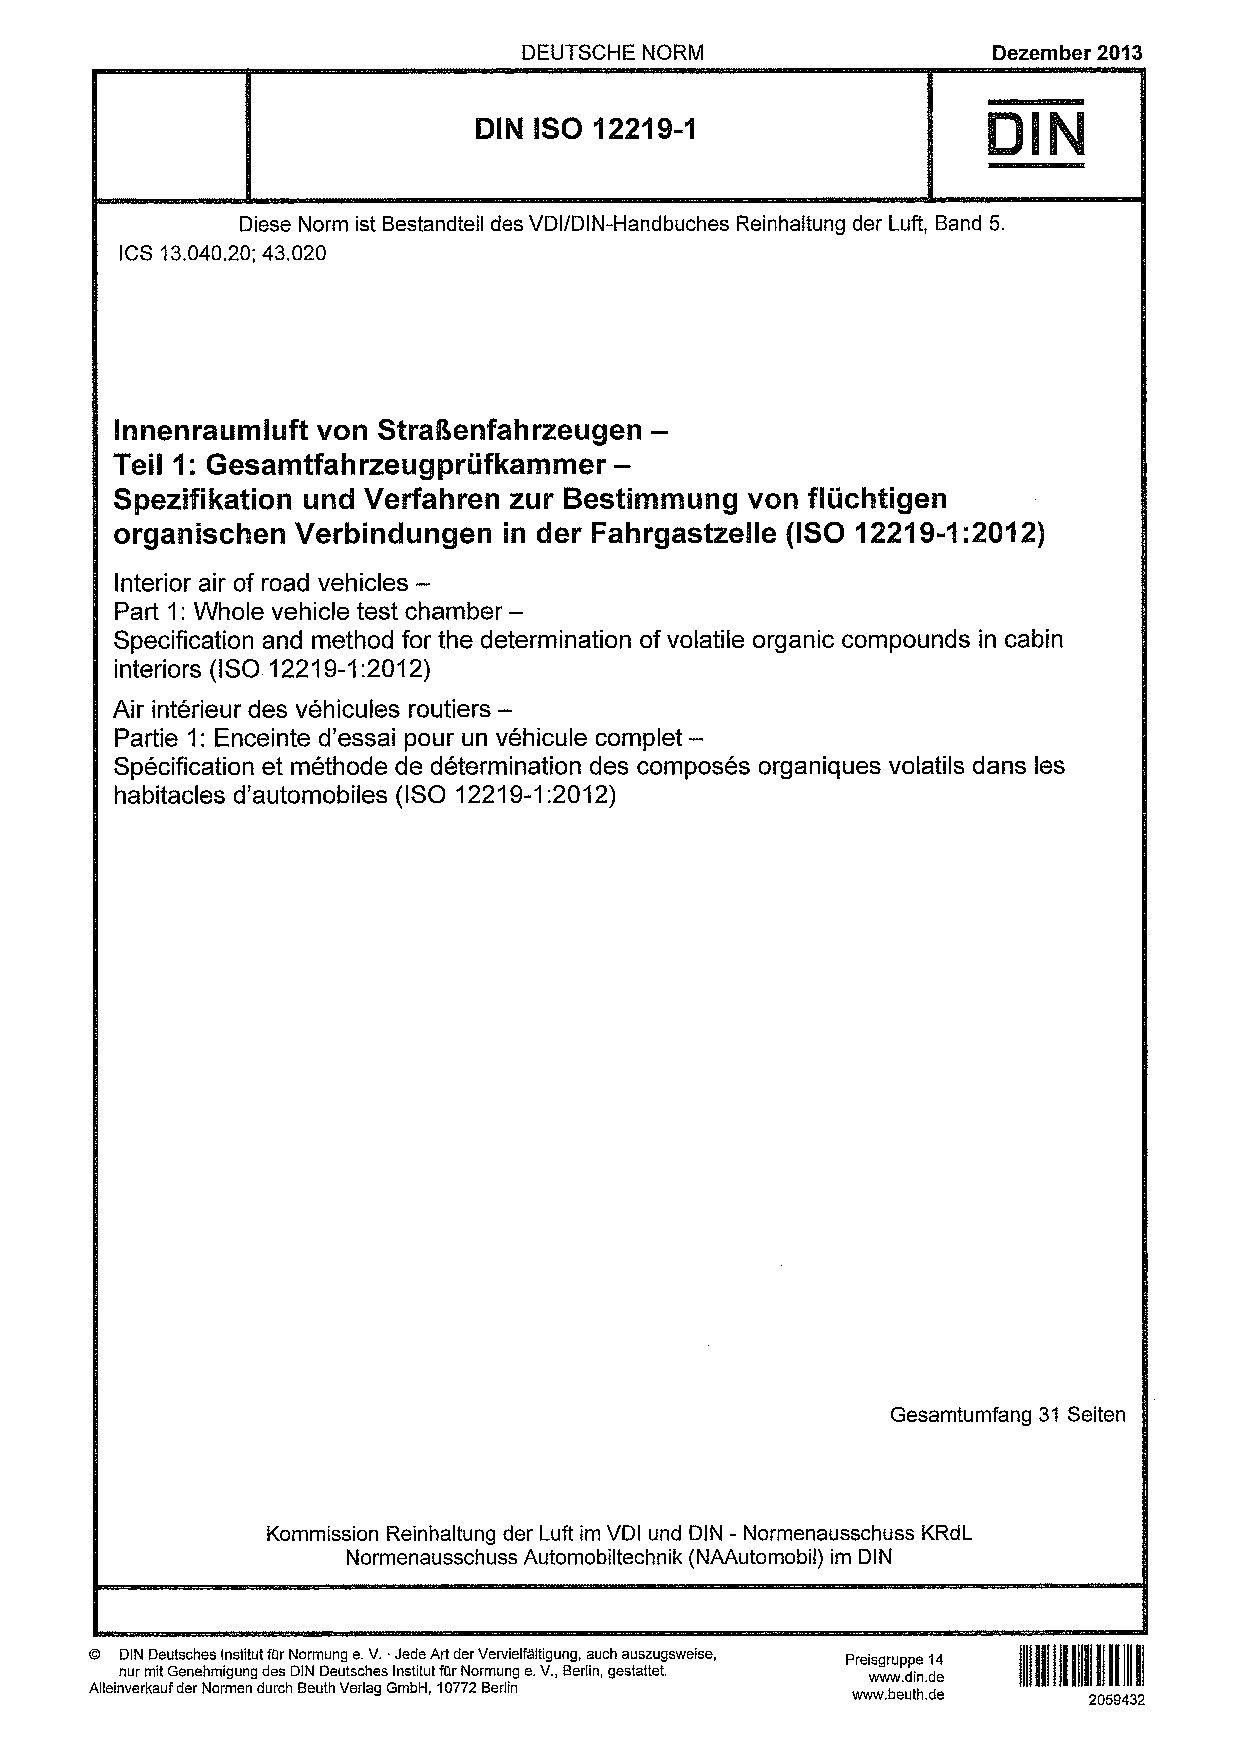 DIN ISO 12219-1:2013